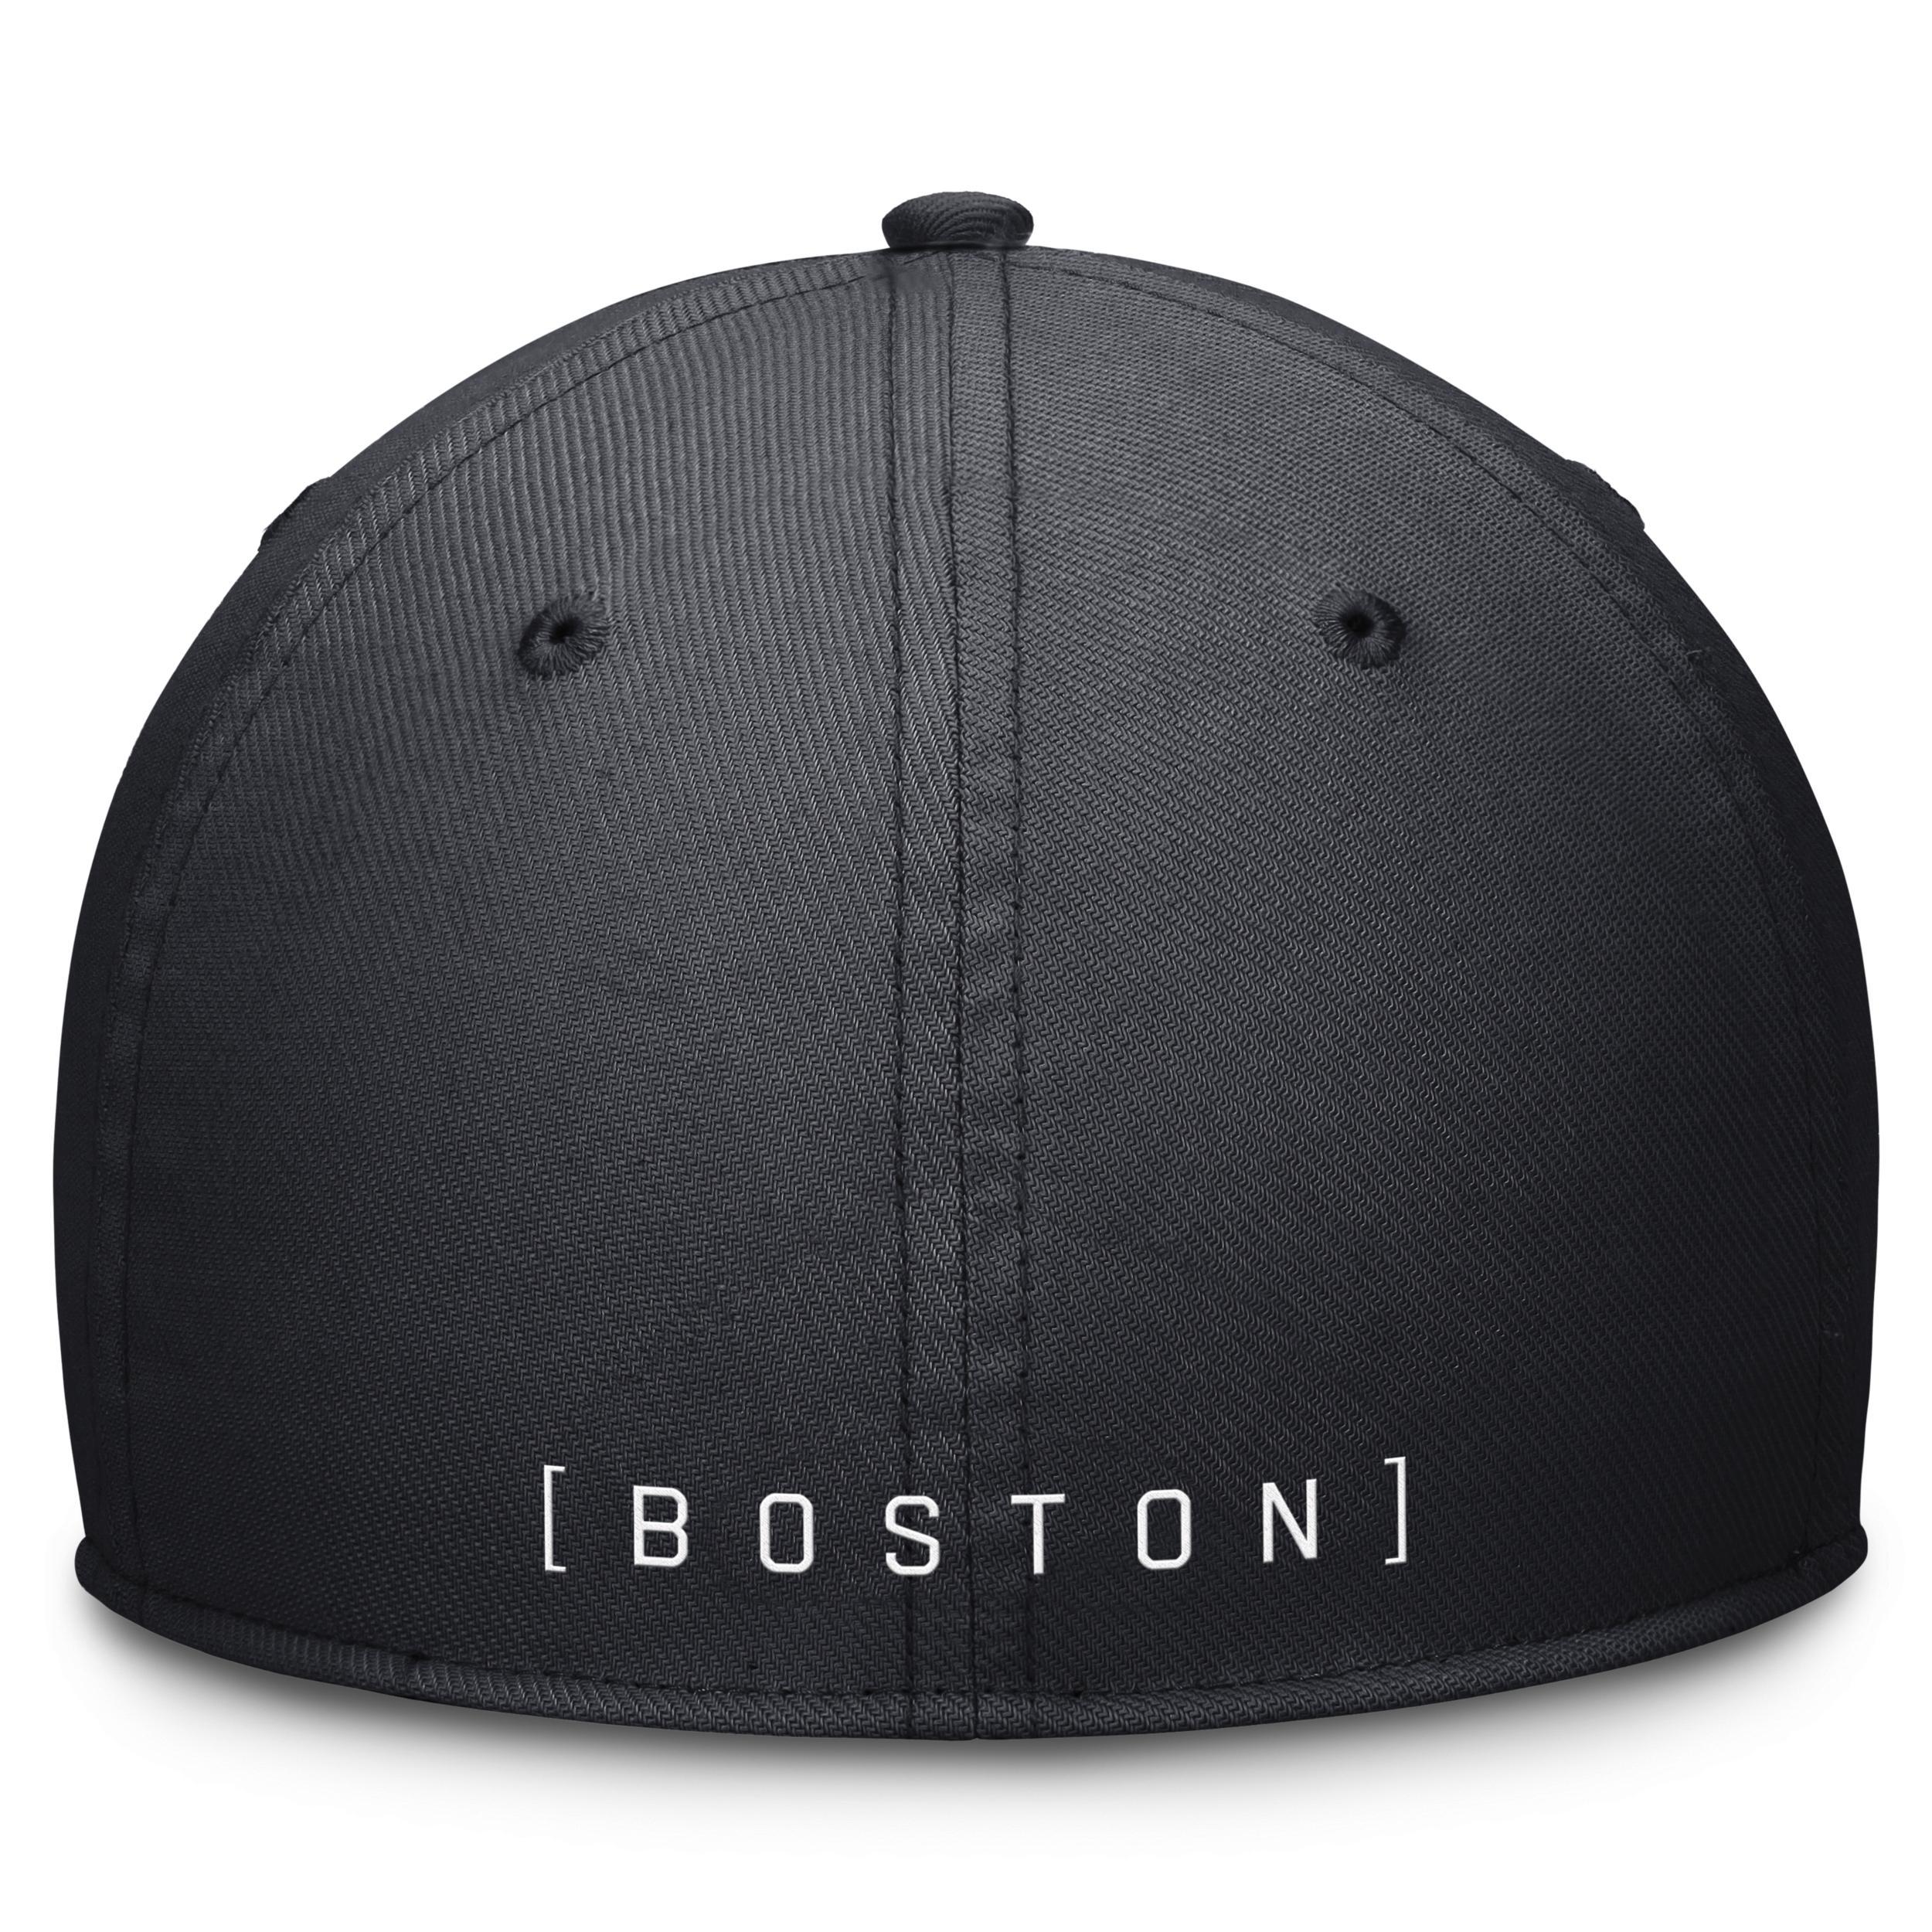 New York Yankees Statement Swoosh Nike Men's Dri-FIT MLB Hat Product Image